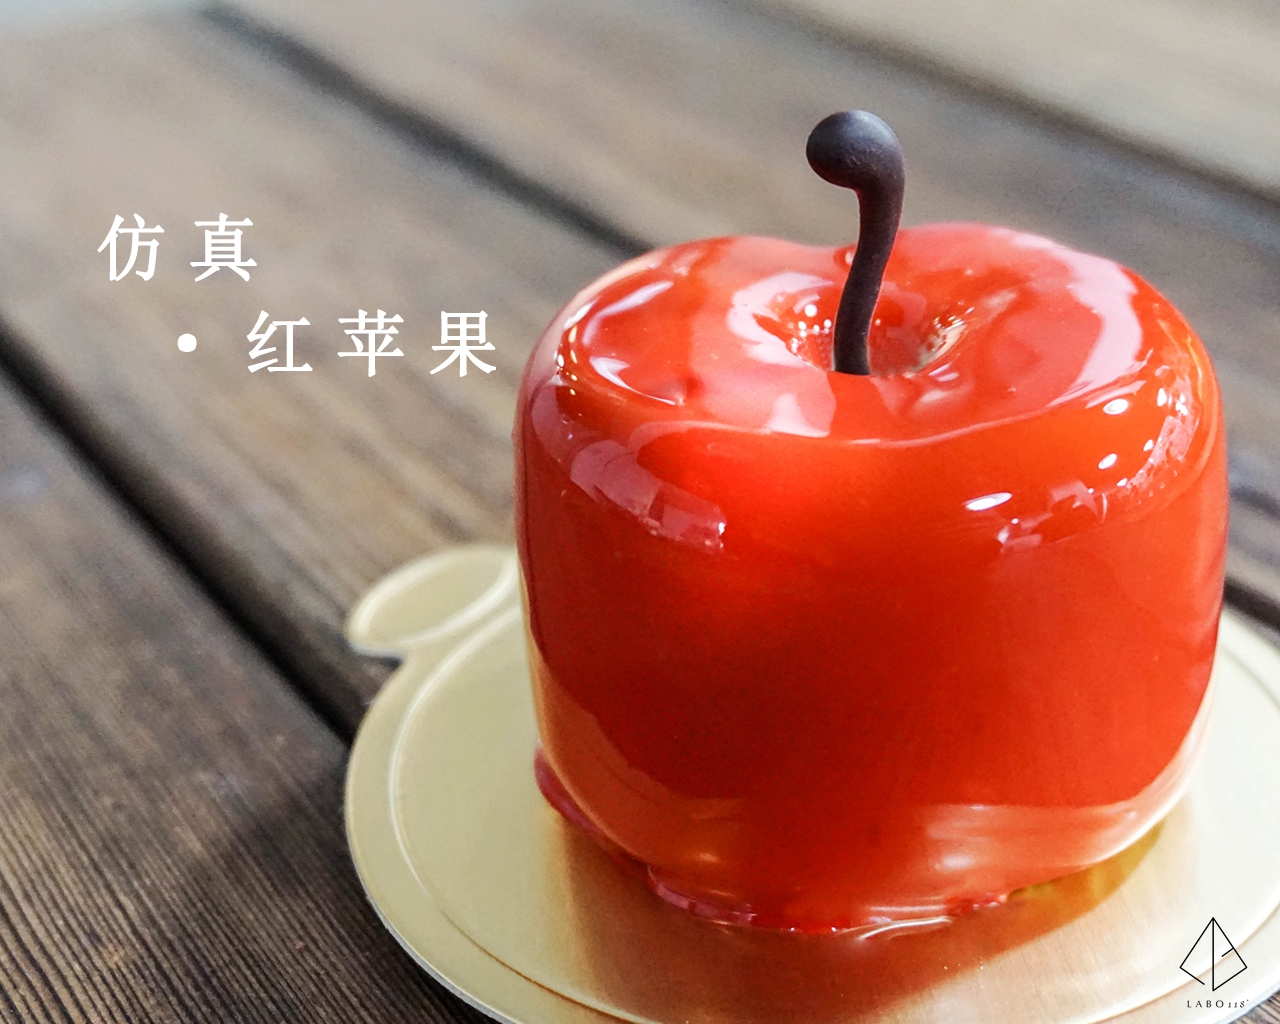 Labo Recipe.2|红彤彤·仿真红苹果的做法